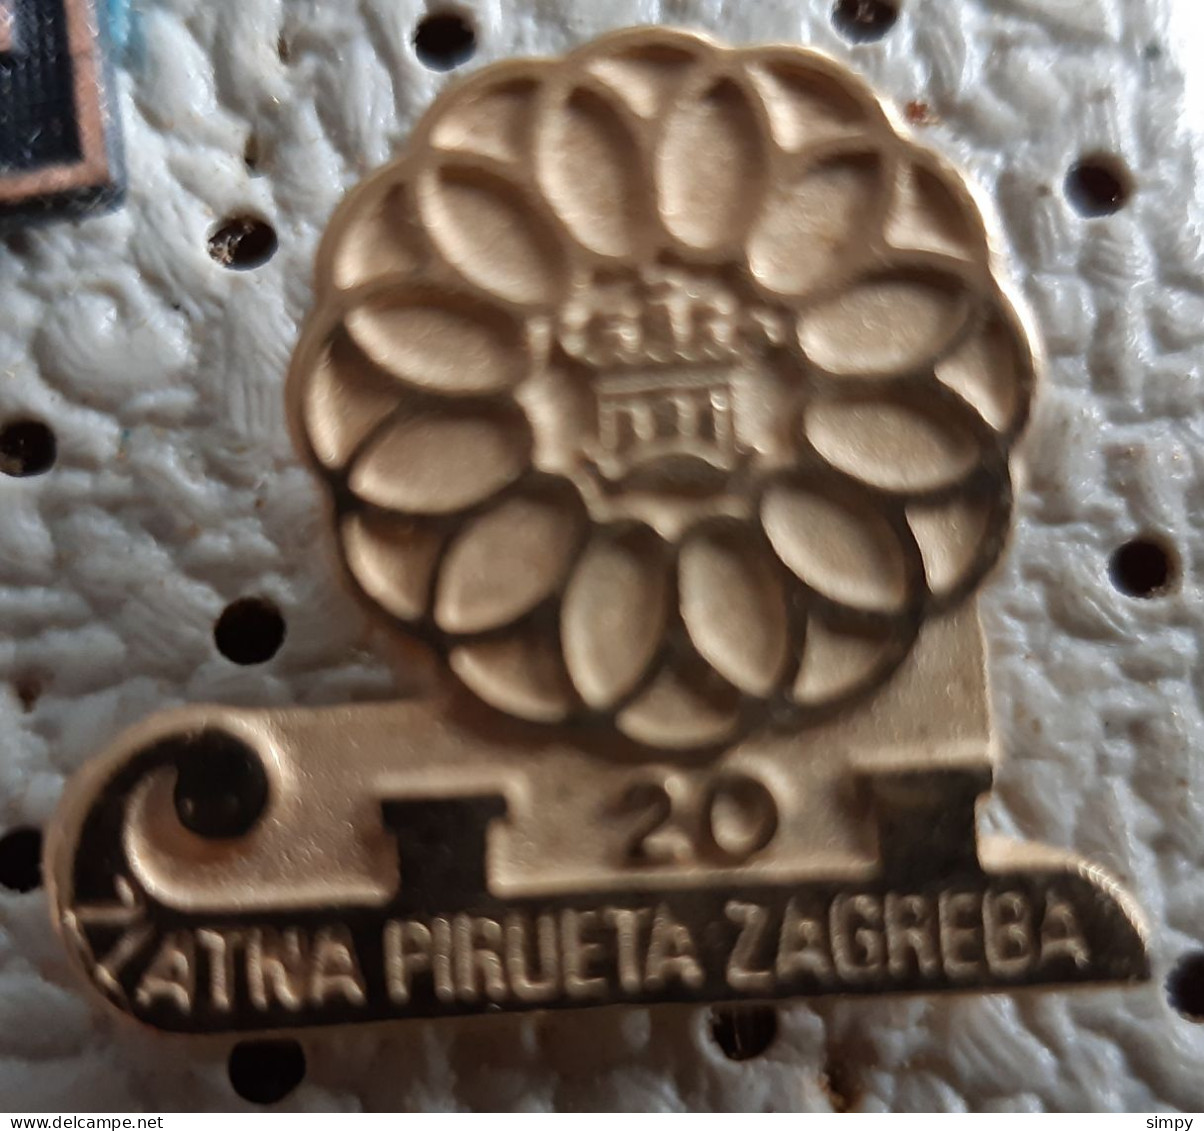 Zlatna Pirueta Zagreb 20 Years  Figure Skating Skate  YUgoslavia Vintage Pin Badge - Kunstschaatsen